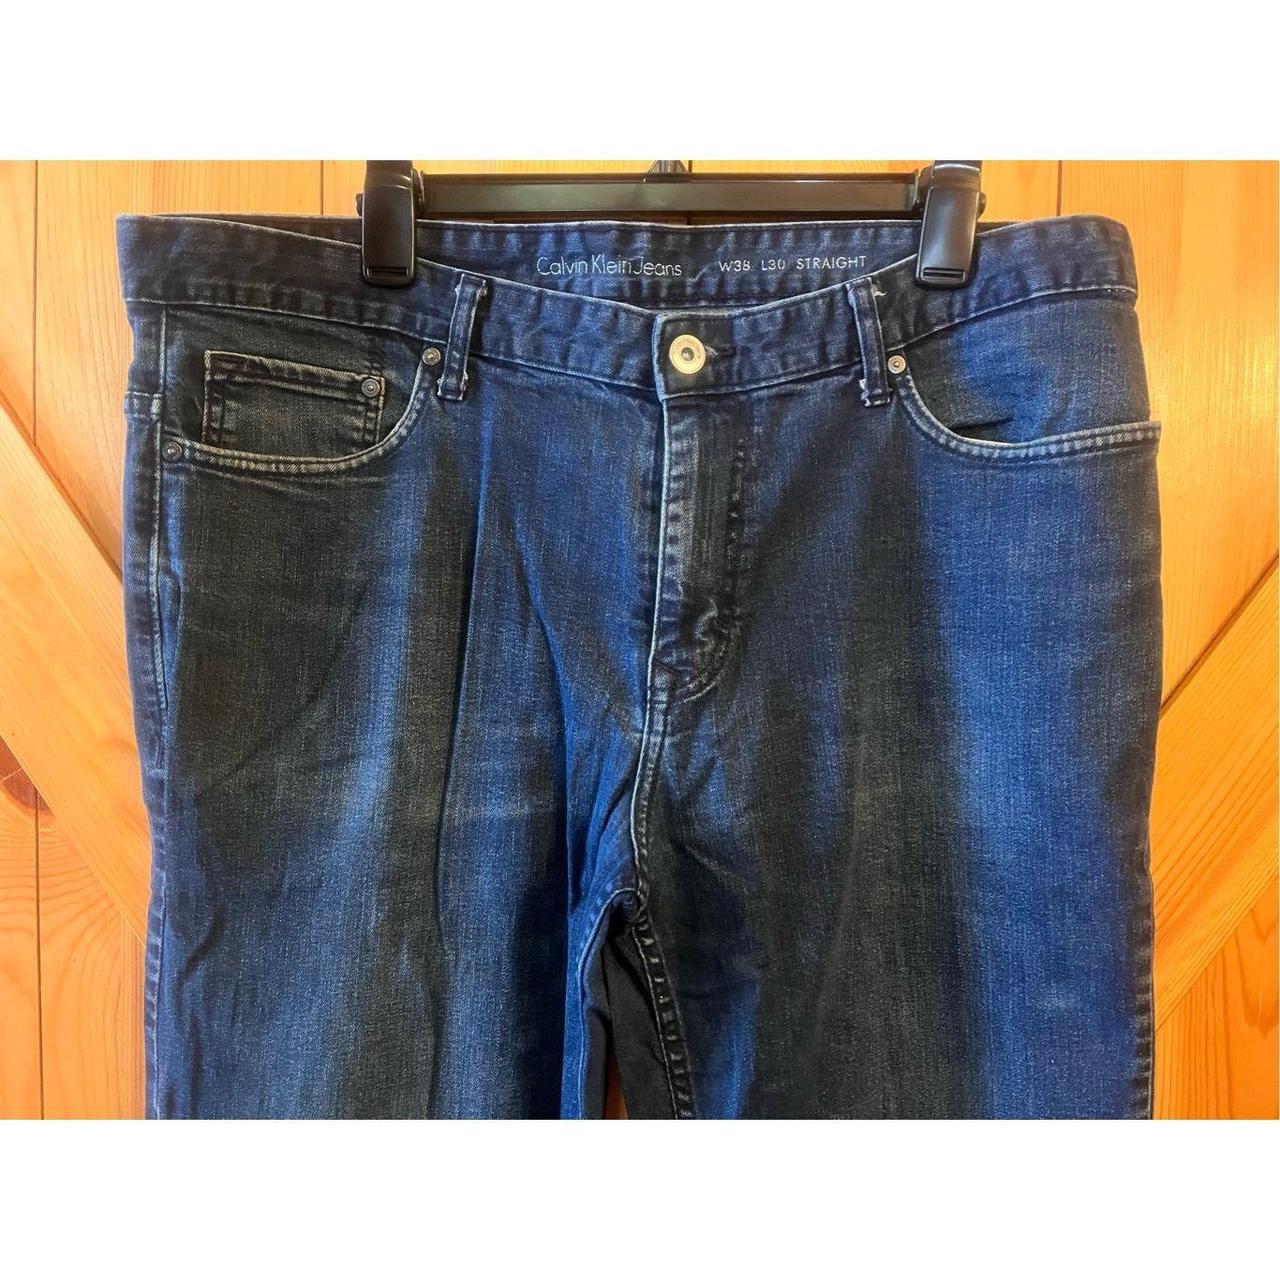 Calvin Klein Jeans Women's Straight Pants Size W38 L30 RN 36543 CA 50900